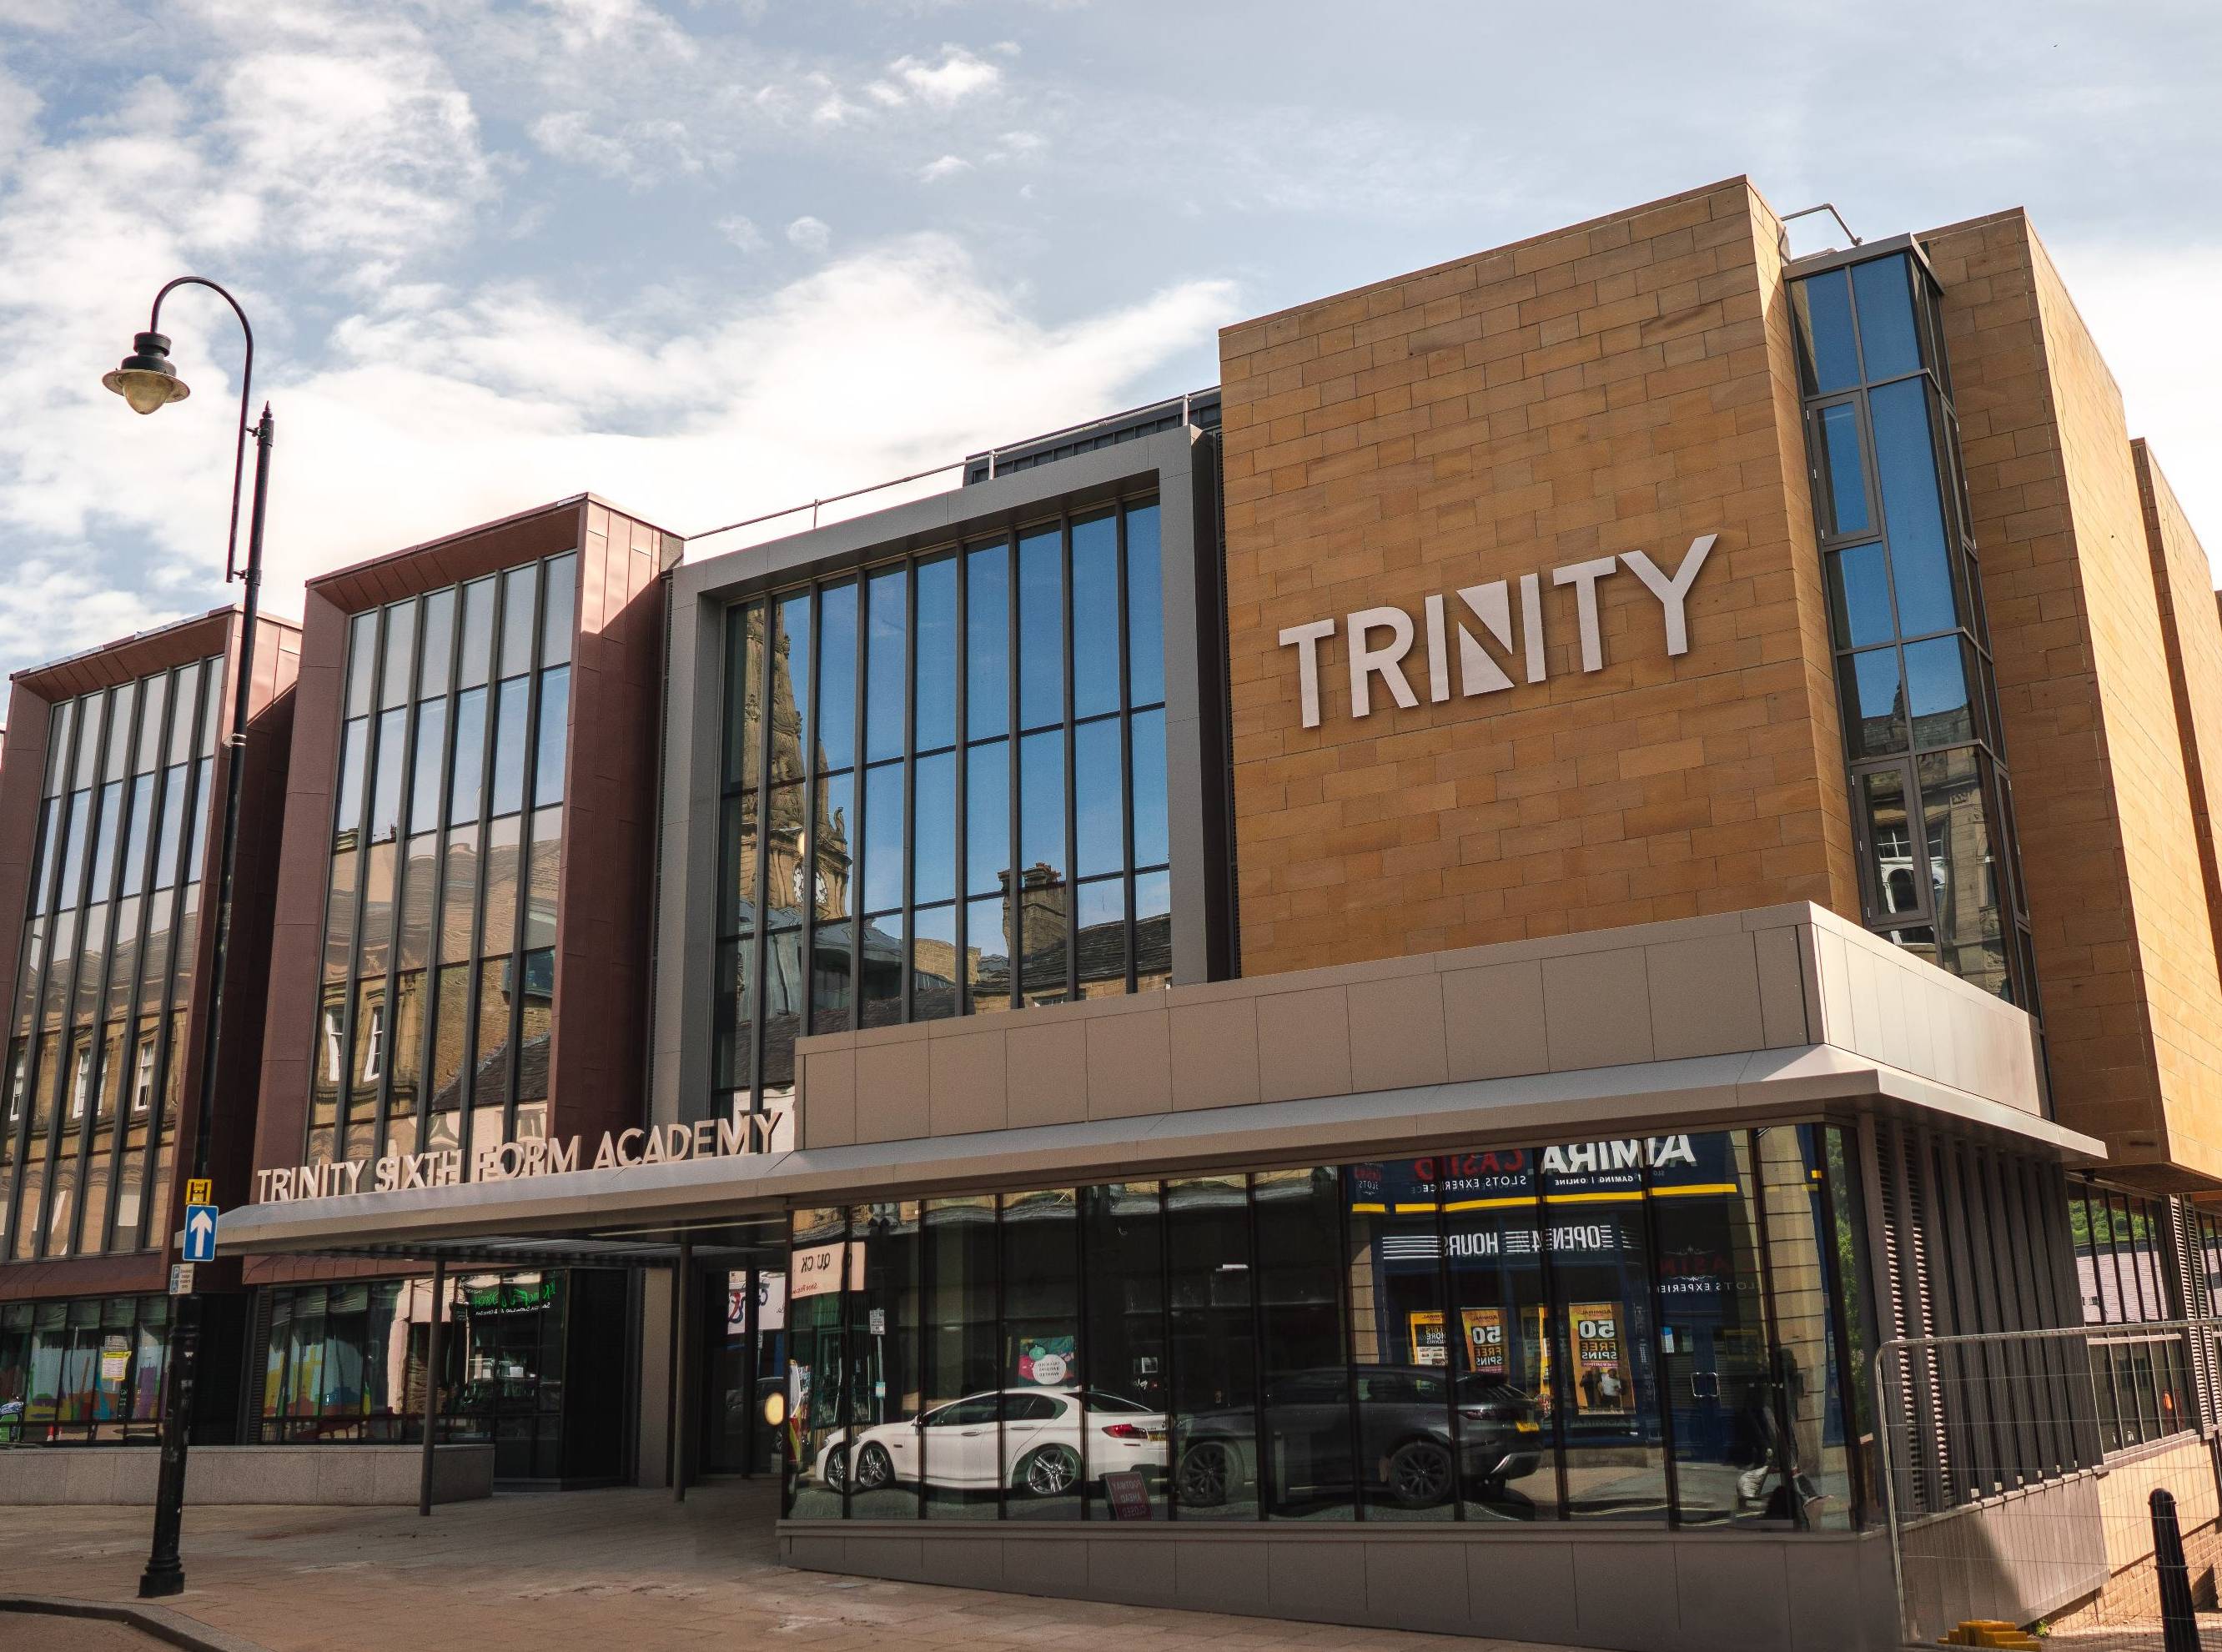 Trinity Sixth Form Academy exterior